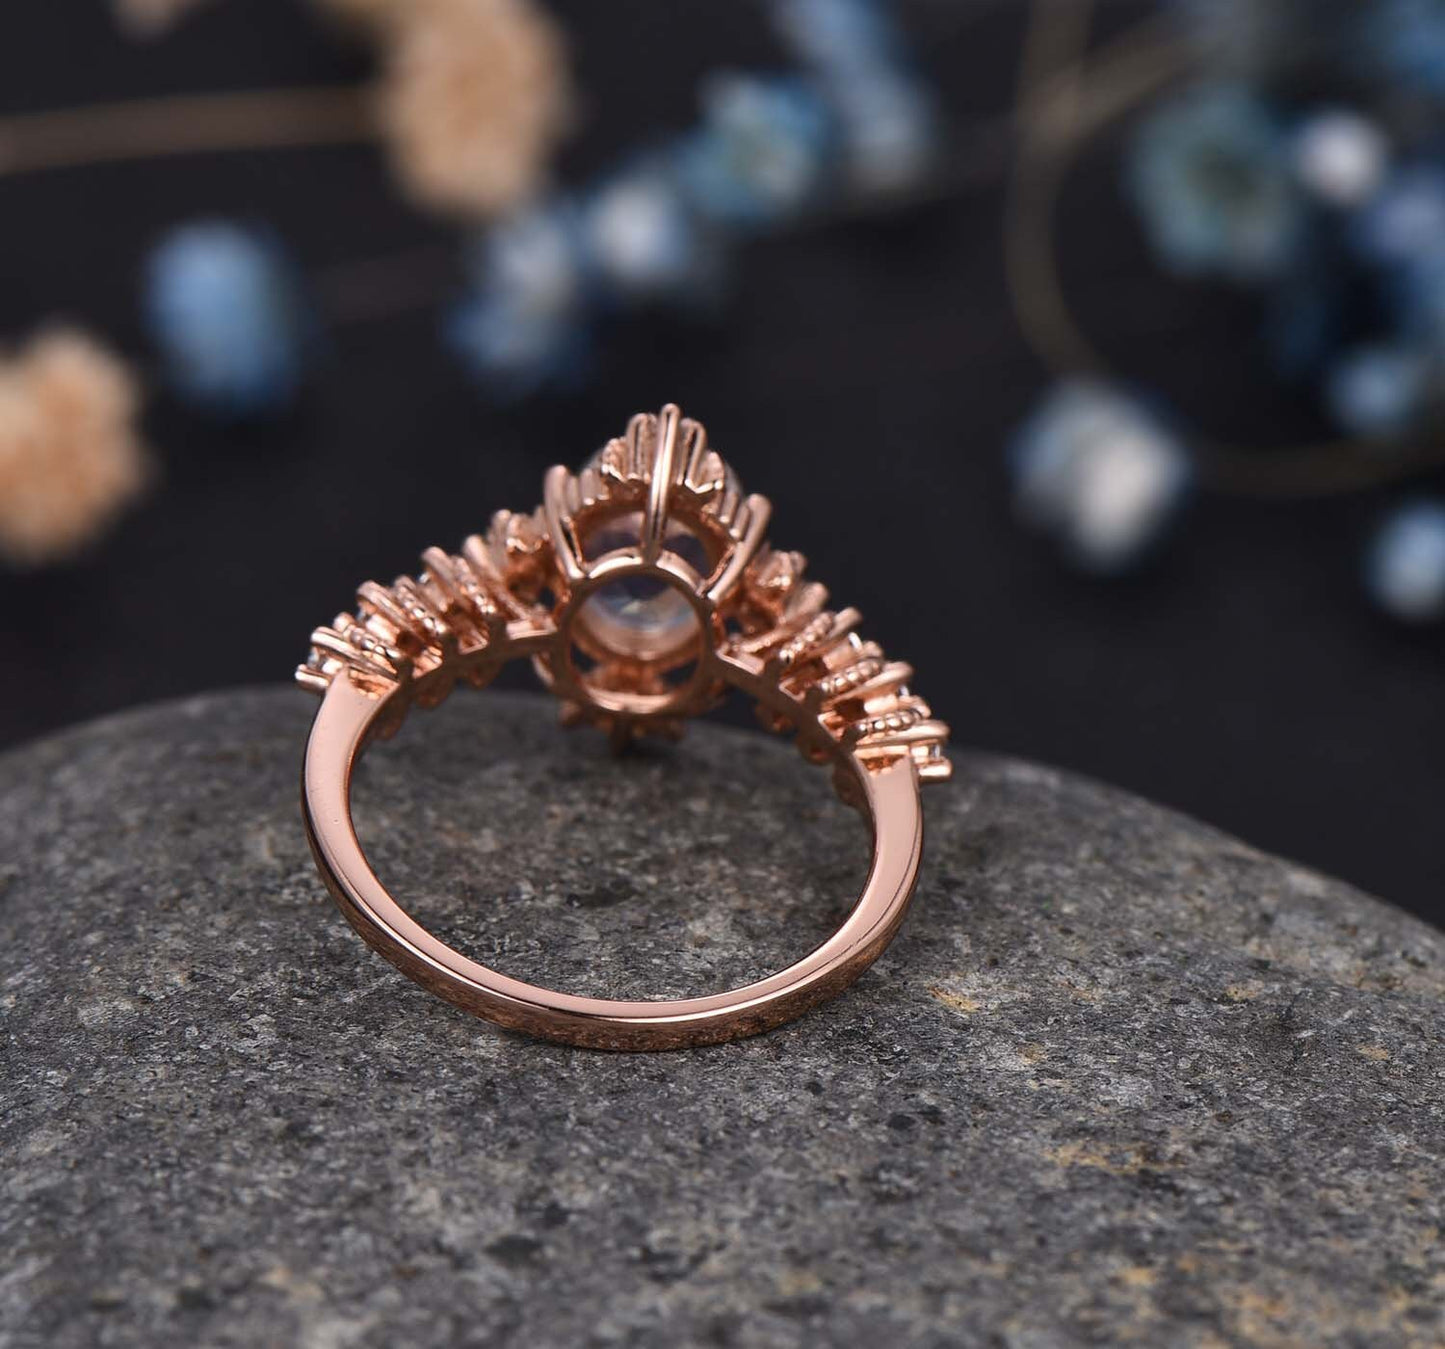 Vintage Moonstone Engagement Ring Rose Gold Diamond/Moissanite Wedding Ring 6x8mm Oval Cut Moonstone Halo Milgrain Ring June Birthstone